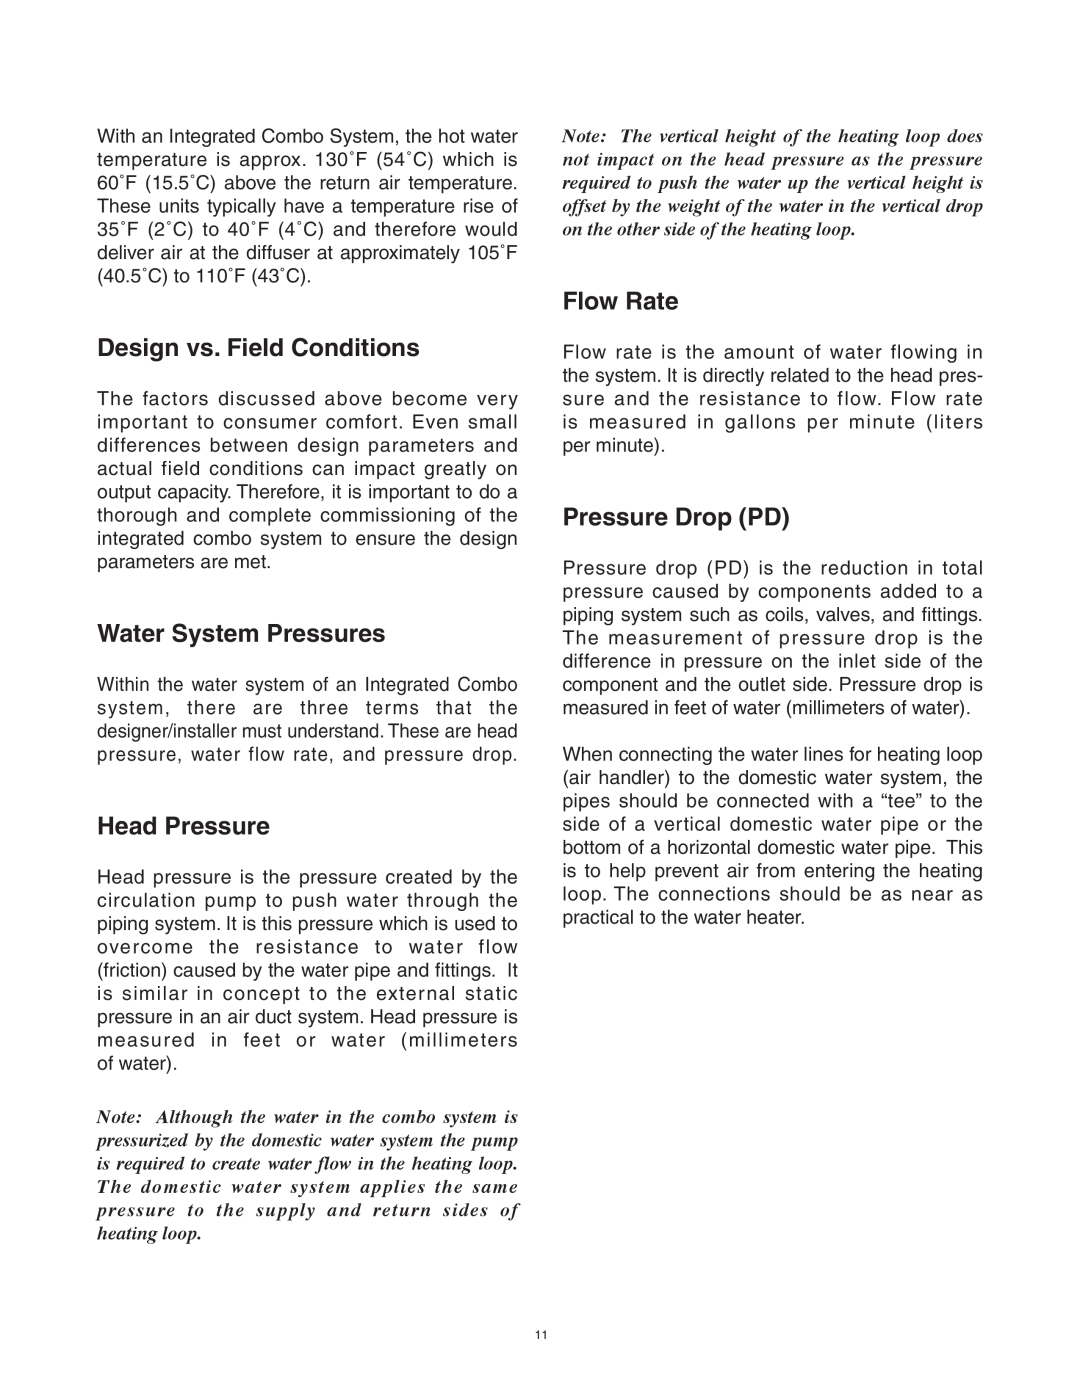 Lifebreath AH60DHW Design vs. Field Conditions, Water System Pressures, Head Pressure, Flow Rate, Pressure Drop PD 